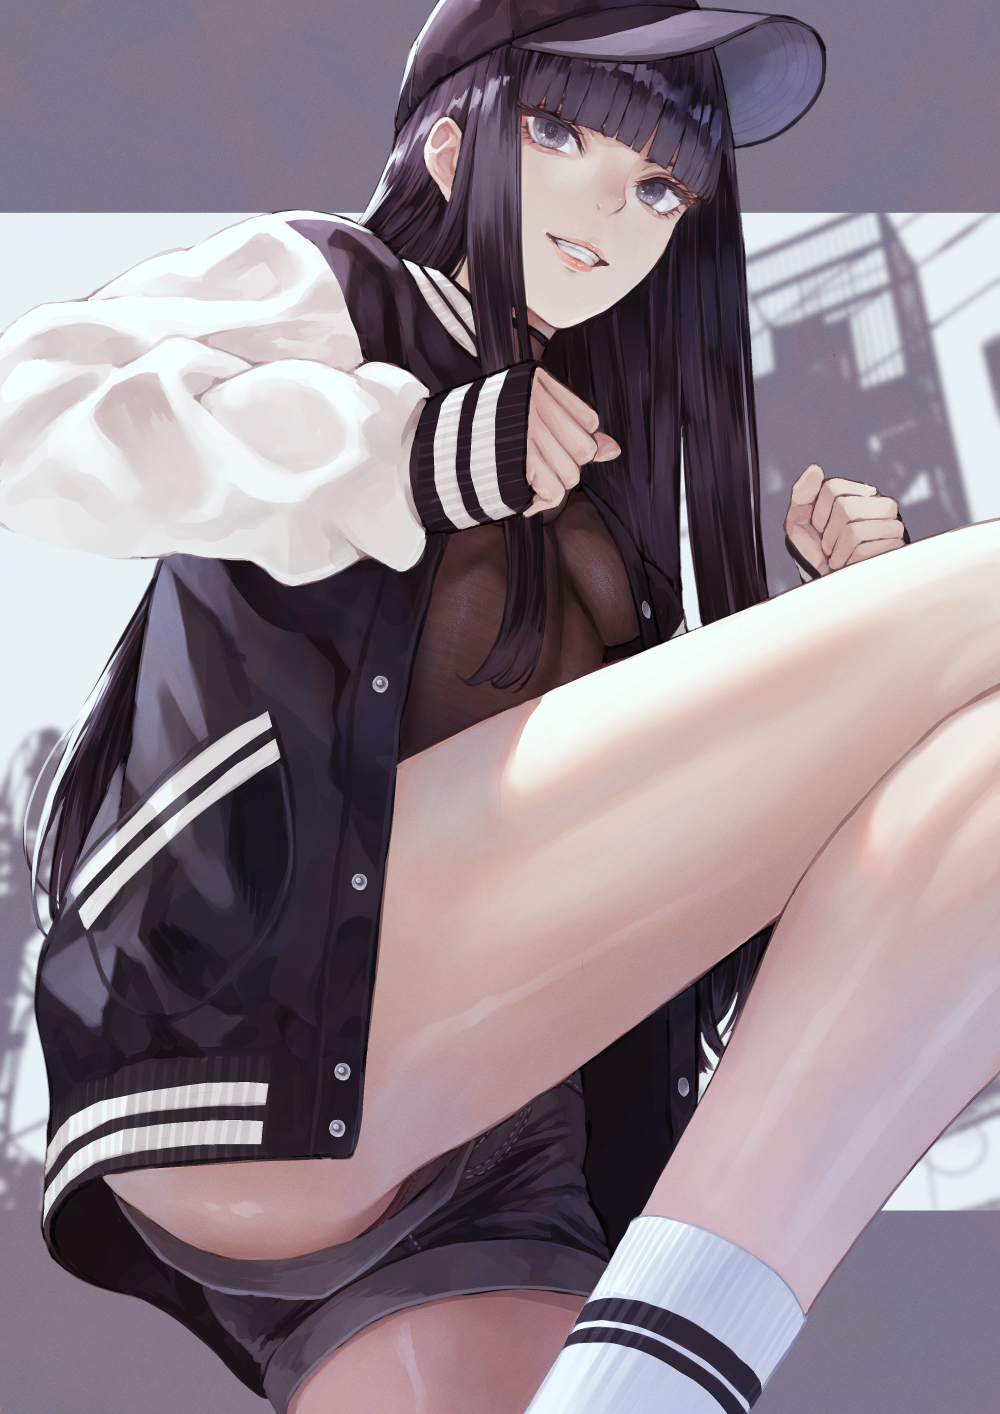 Anime 1000x1414 anime girls black hair baseball cap gray eyes looking at viewer letterman jacket sideboob cleavage shorts hat panties Kaoming artwork